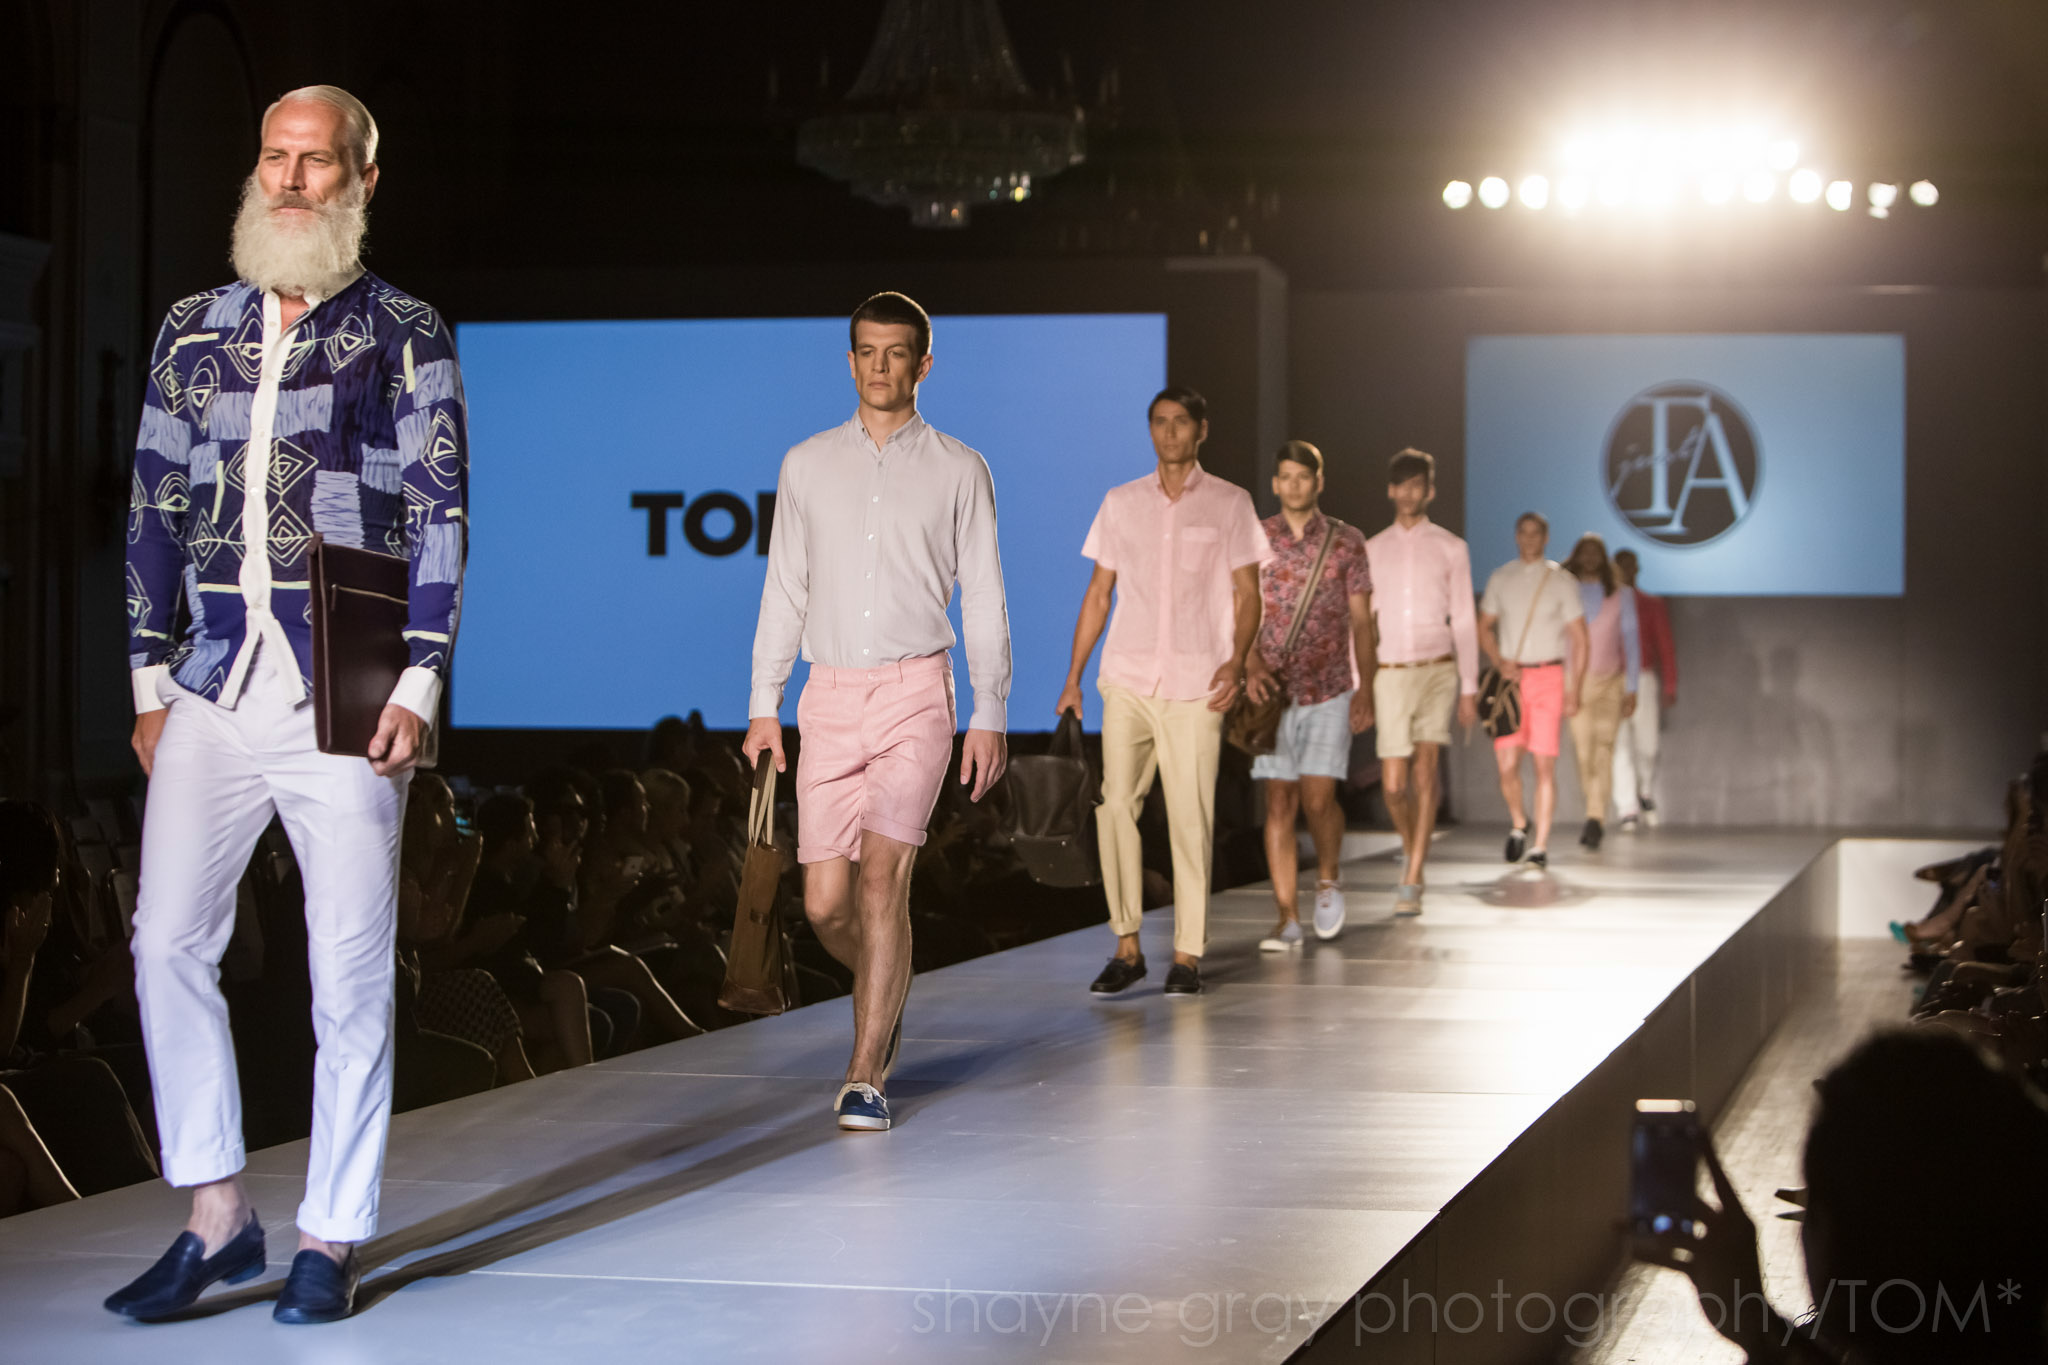 Shayne-Gray-Toronto-men's-fashion_week-TOM-just-ta-6093.jpg